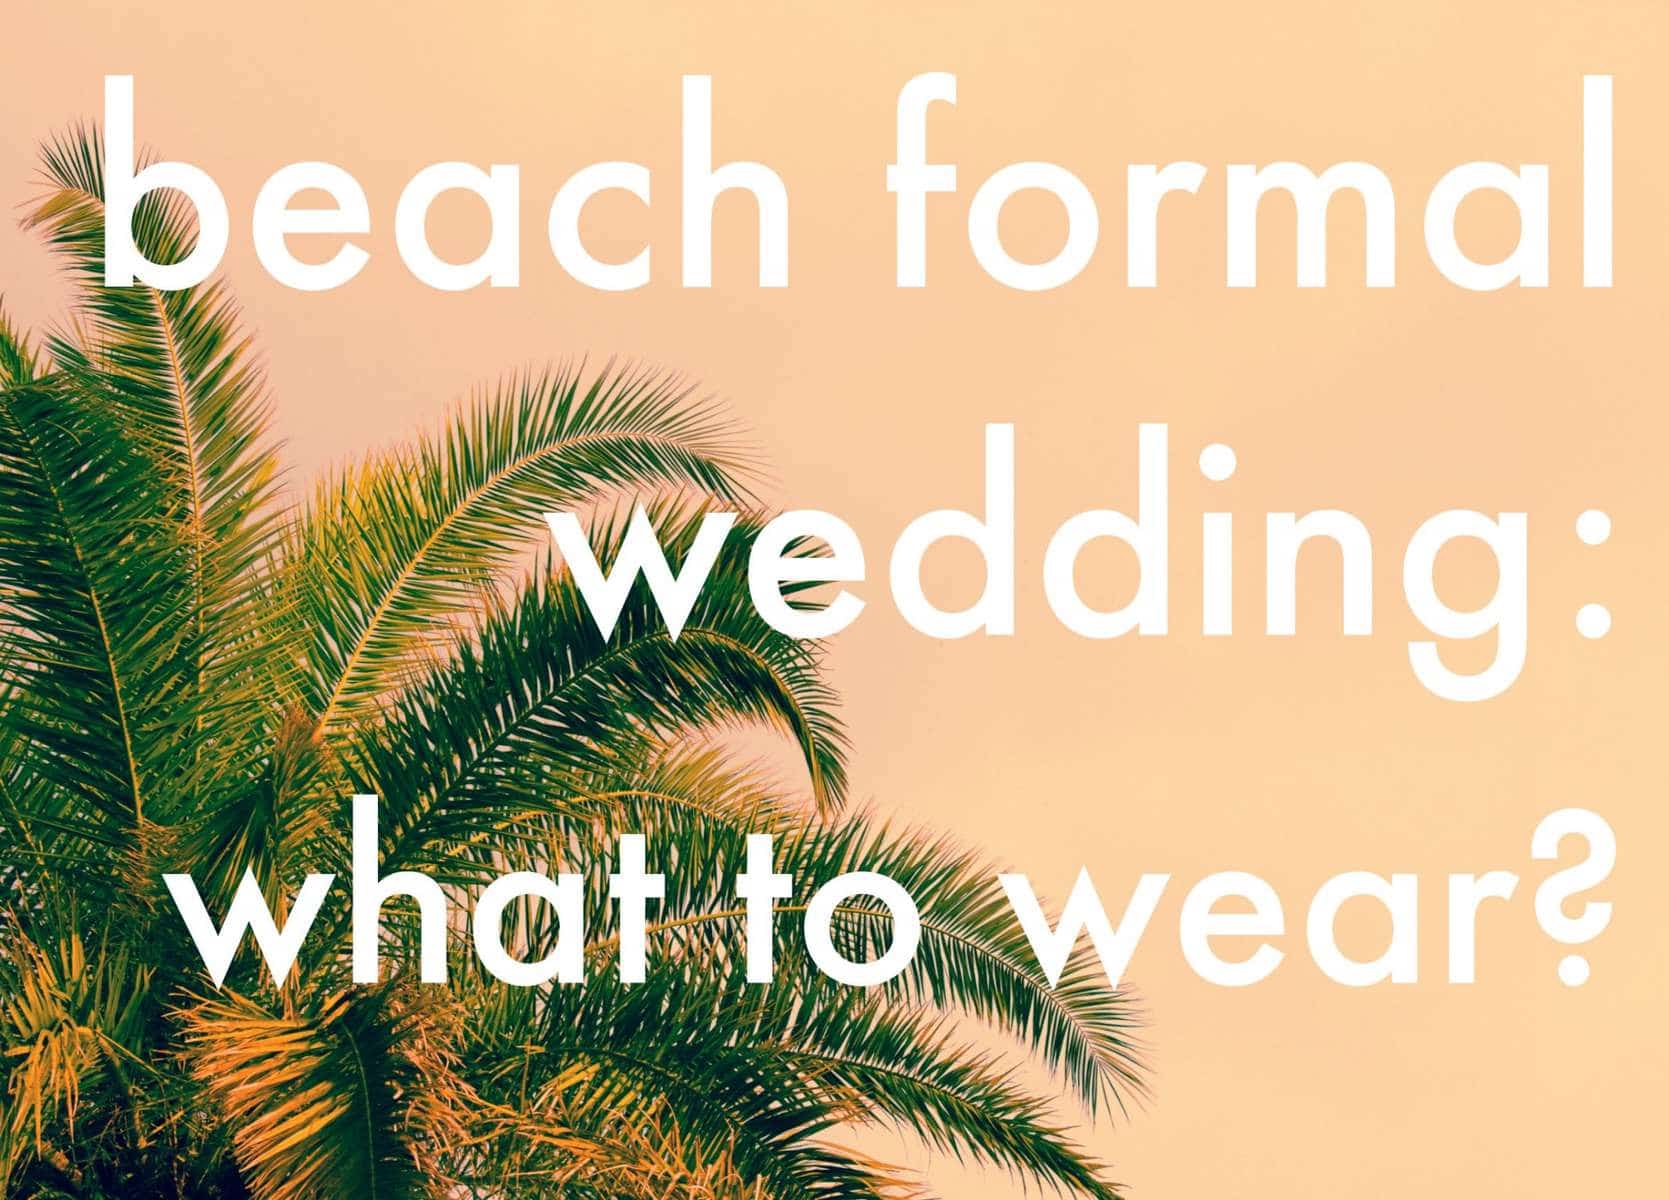 what to wear to a beach formal wedding in florida - wardrobe oxygen